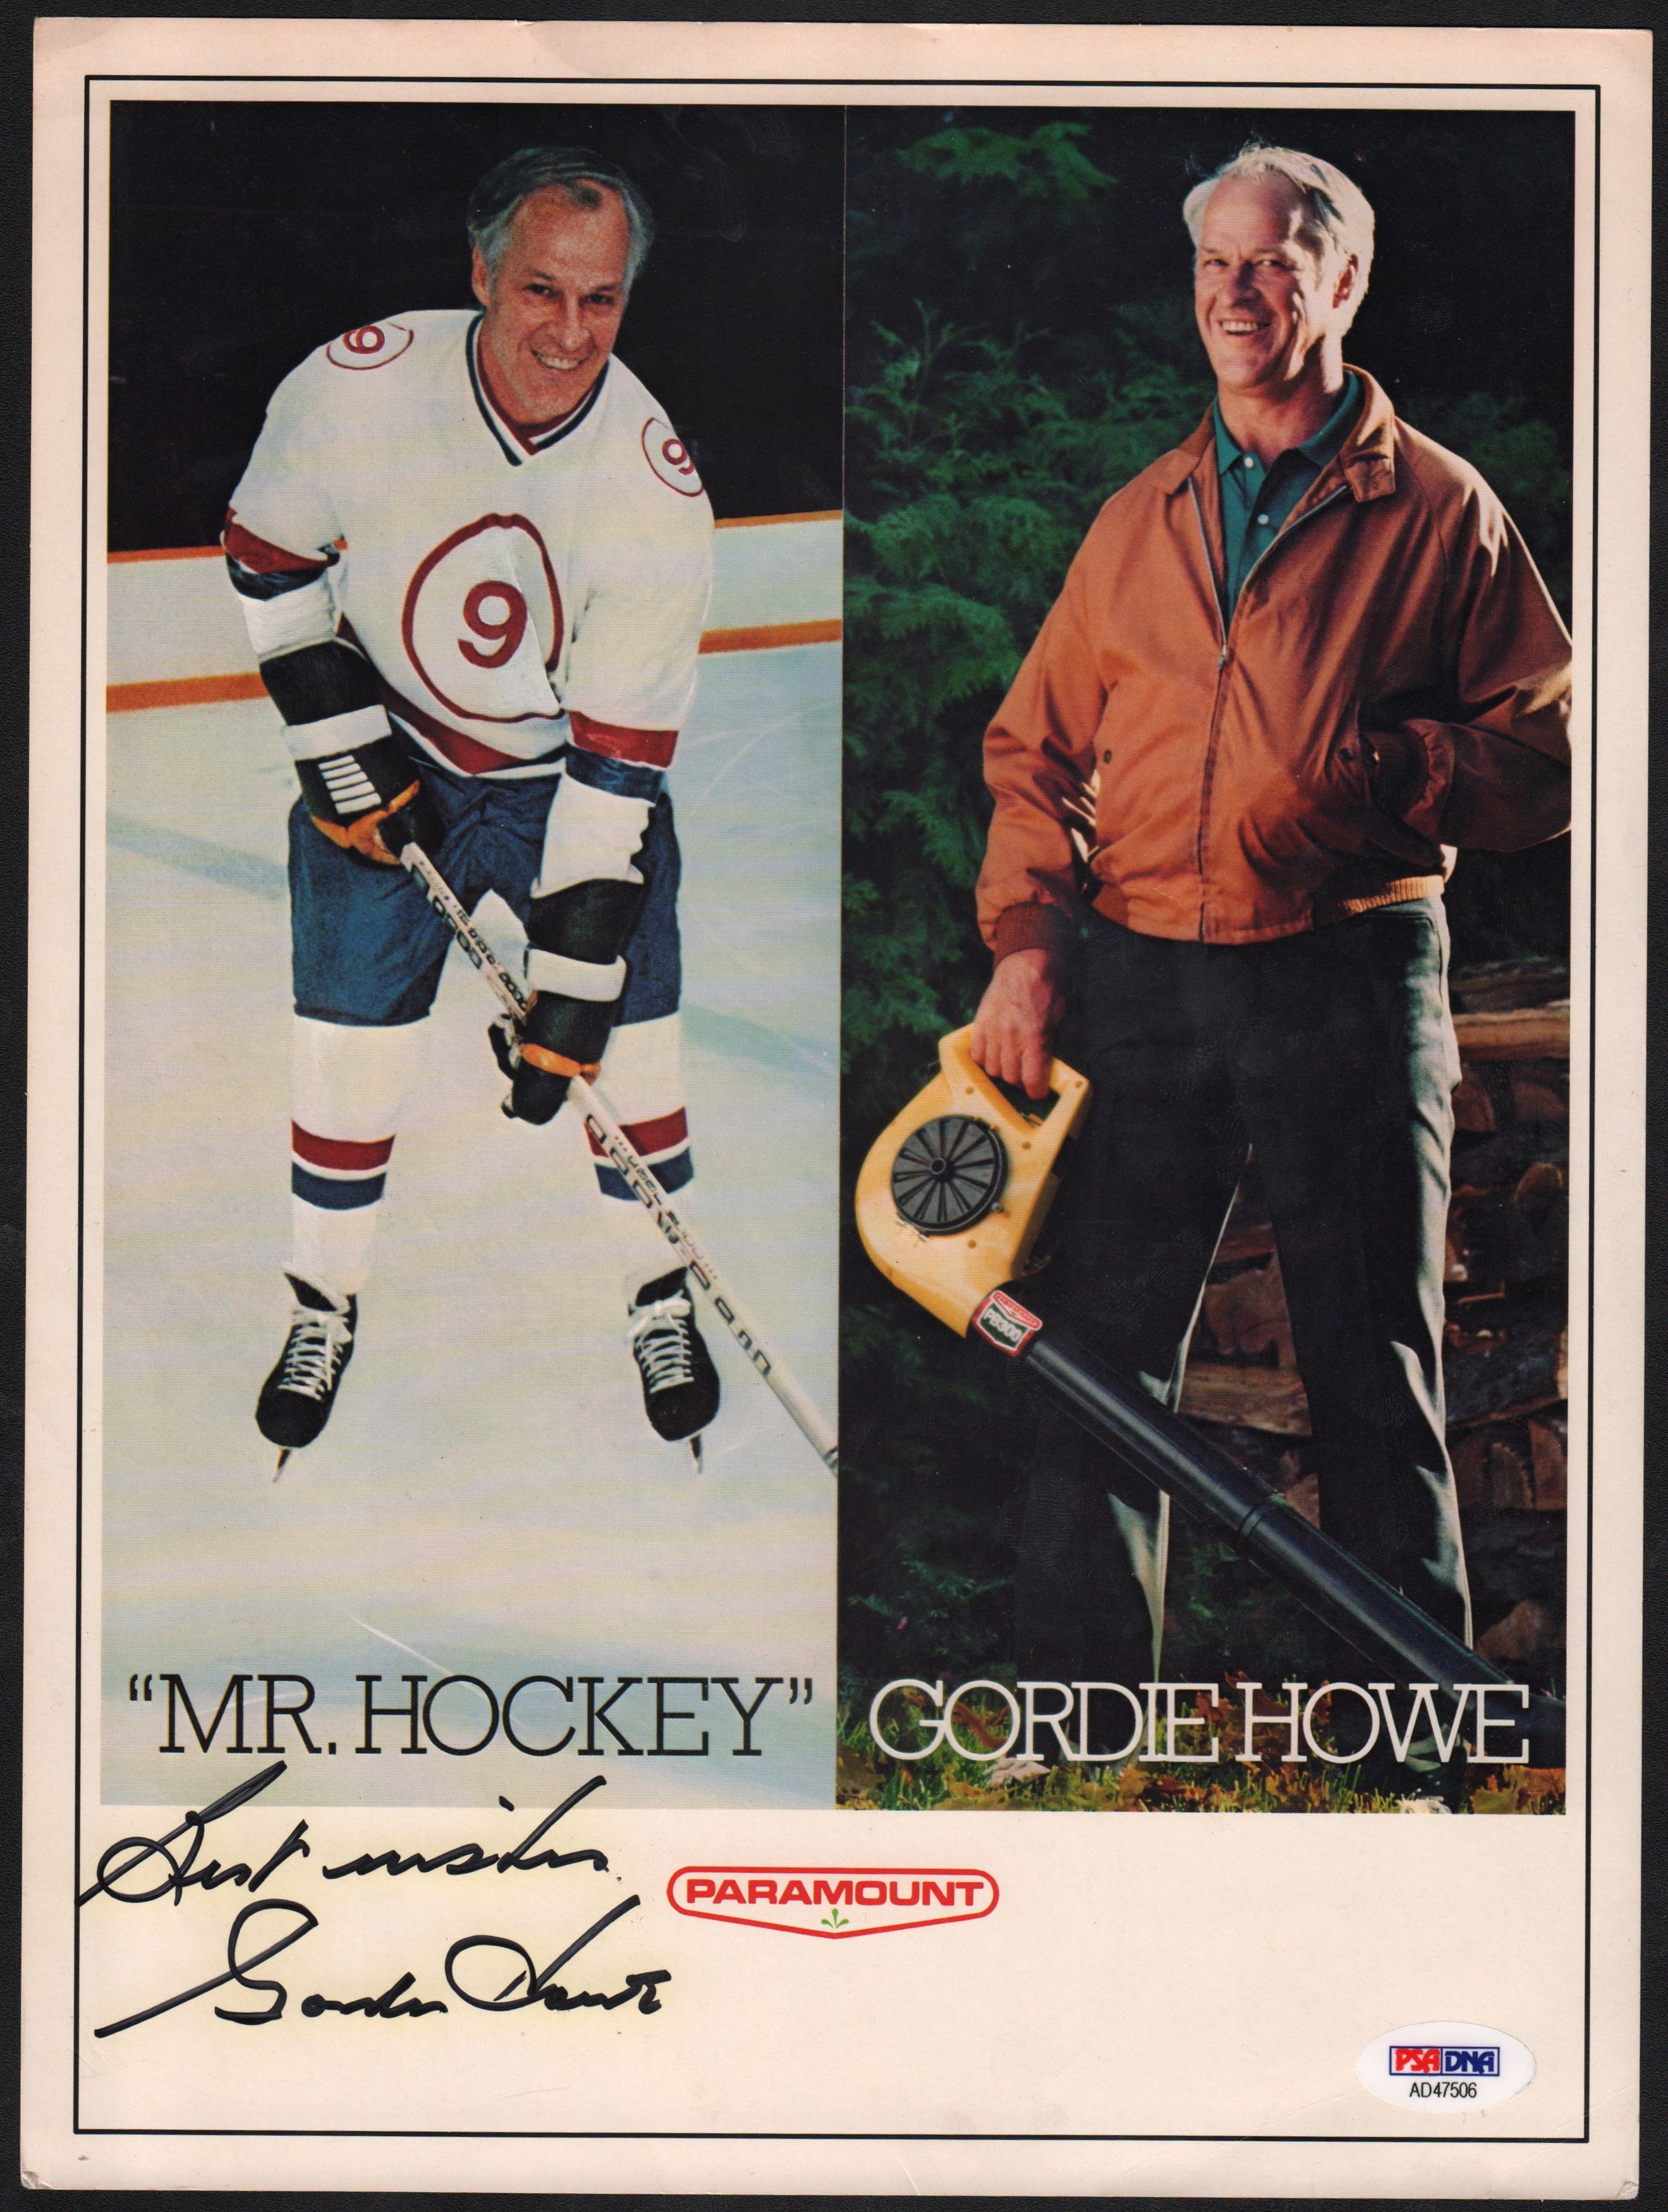 Hockey - 1970s Gordie Howe Signed Advertising Poster (PSA/DNA)